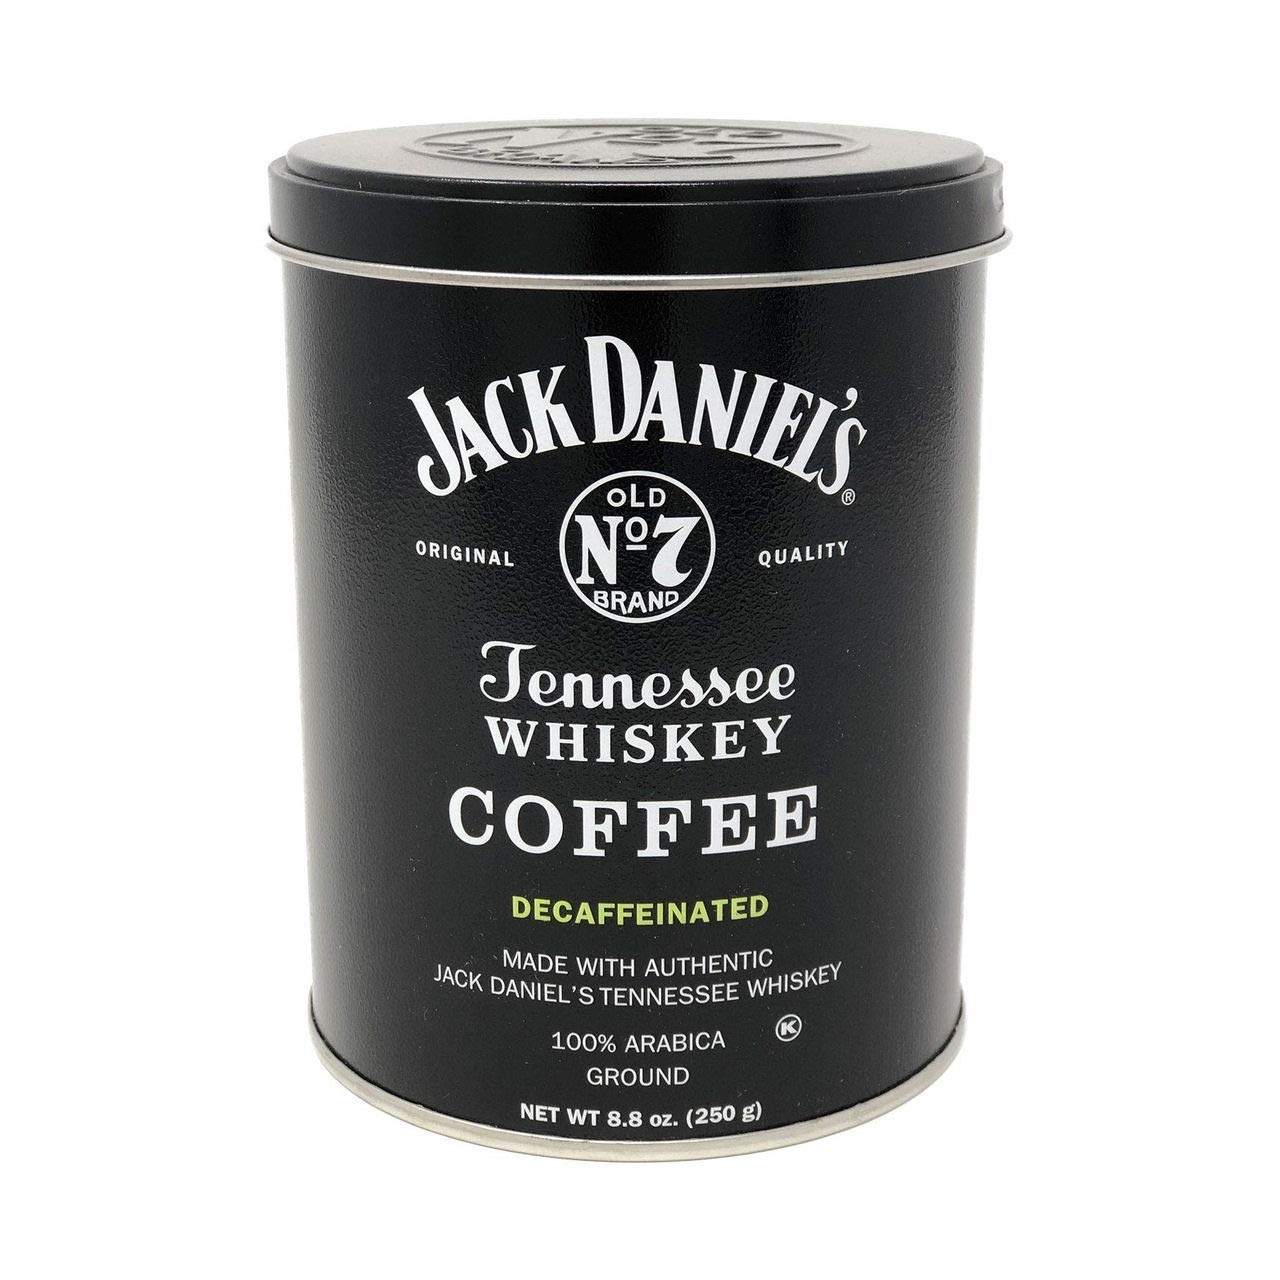 Jack Daniel's Tennessee Whiskey Coffee - DECAF